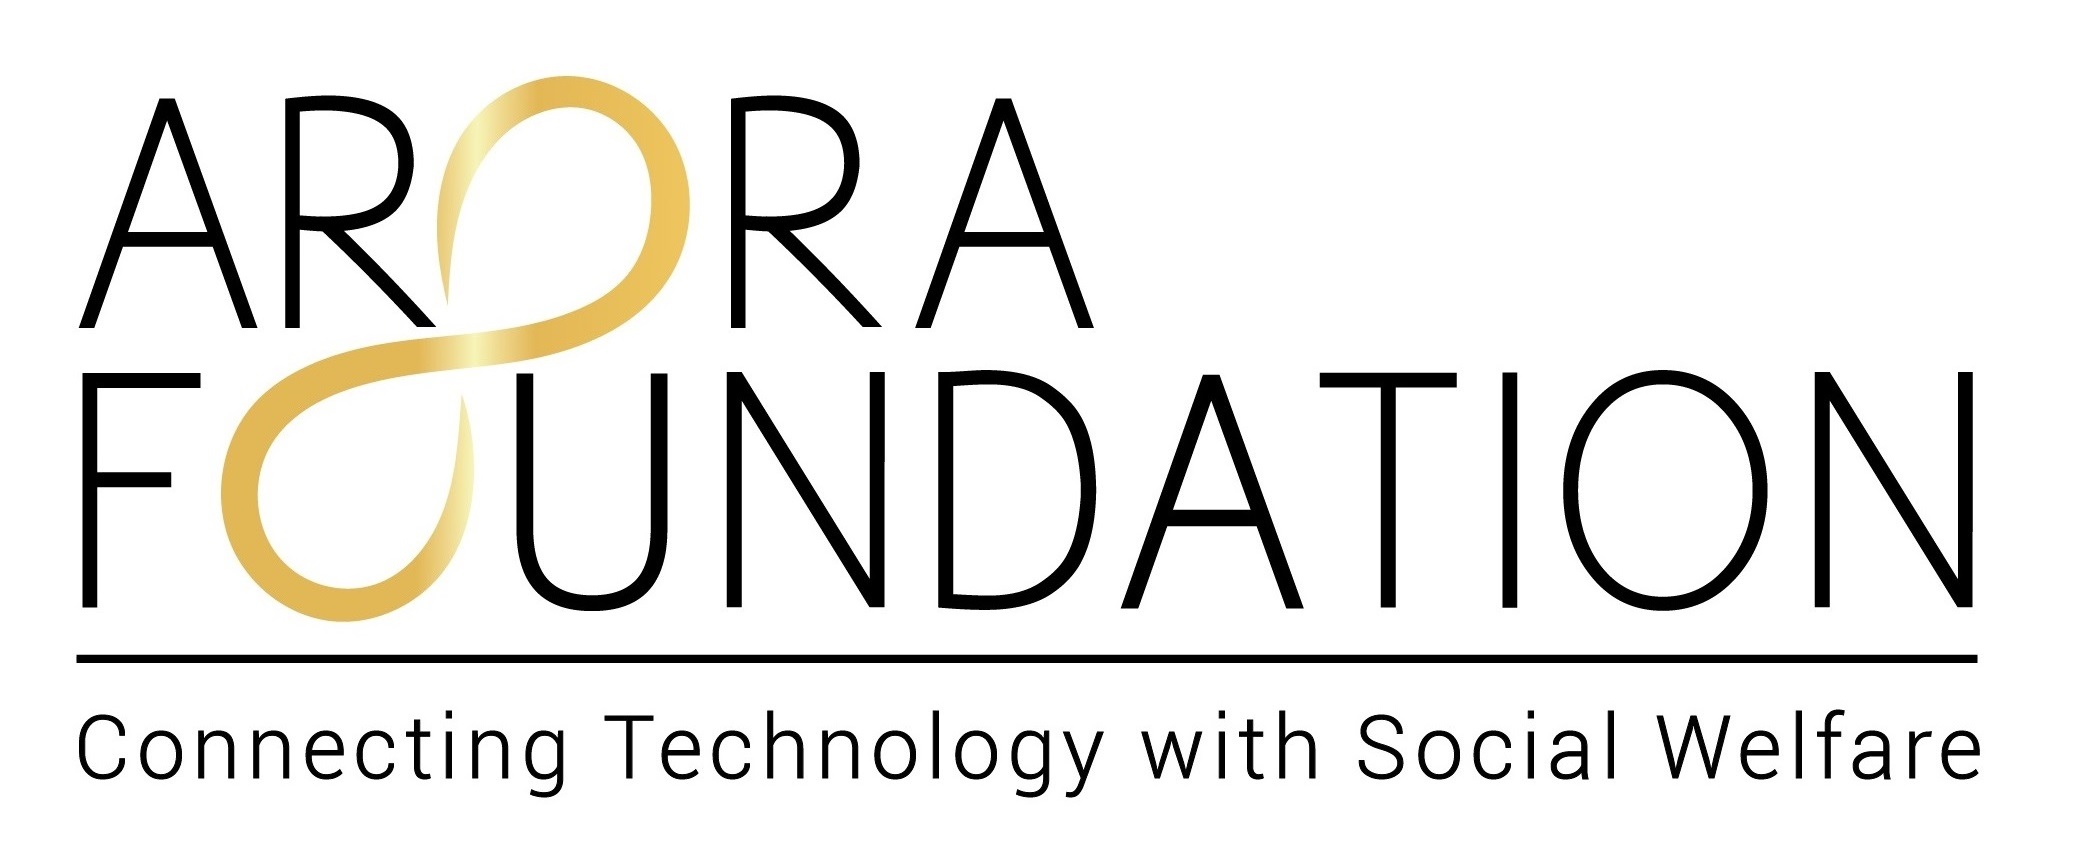 Arora-Foundation-Profile-Logo.jpg